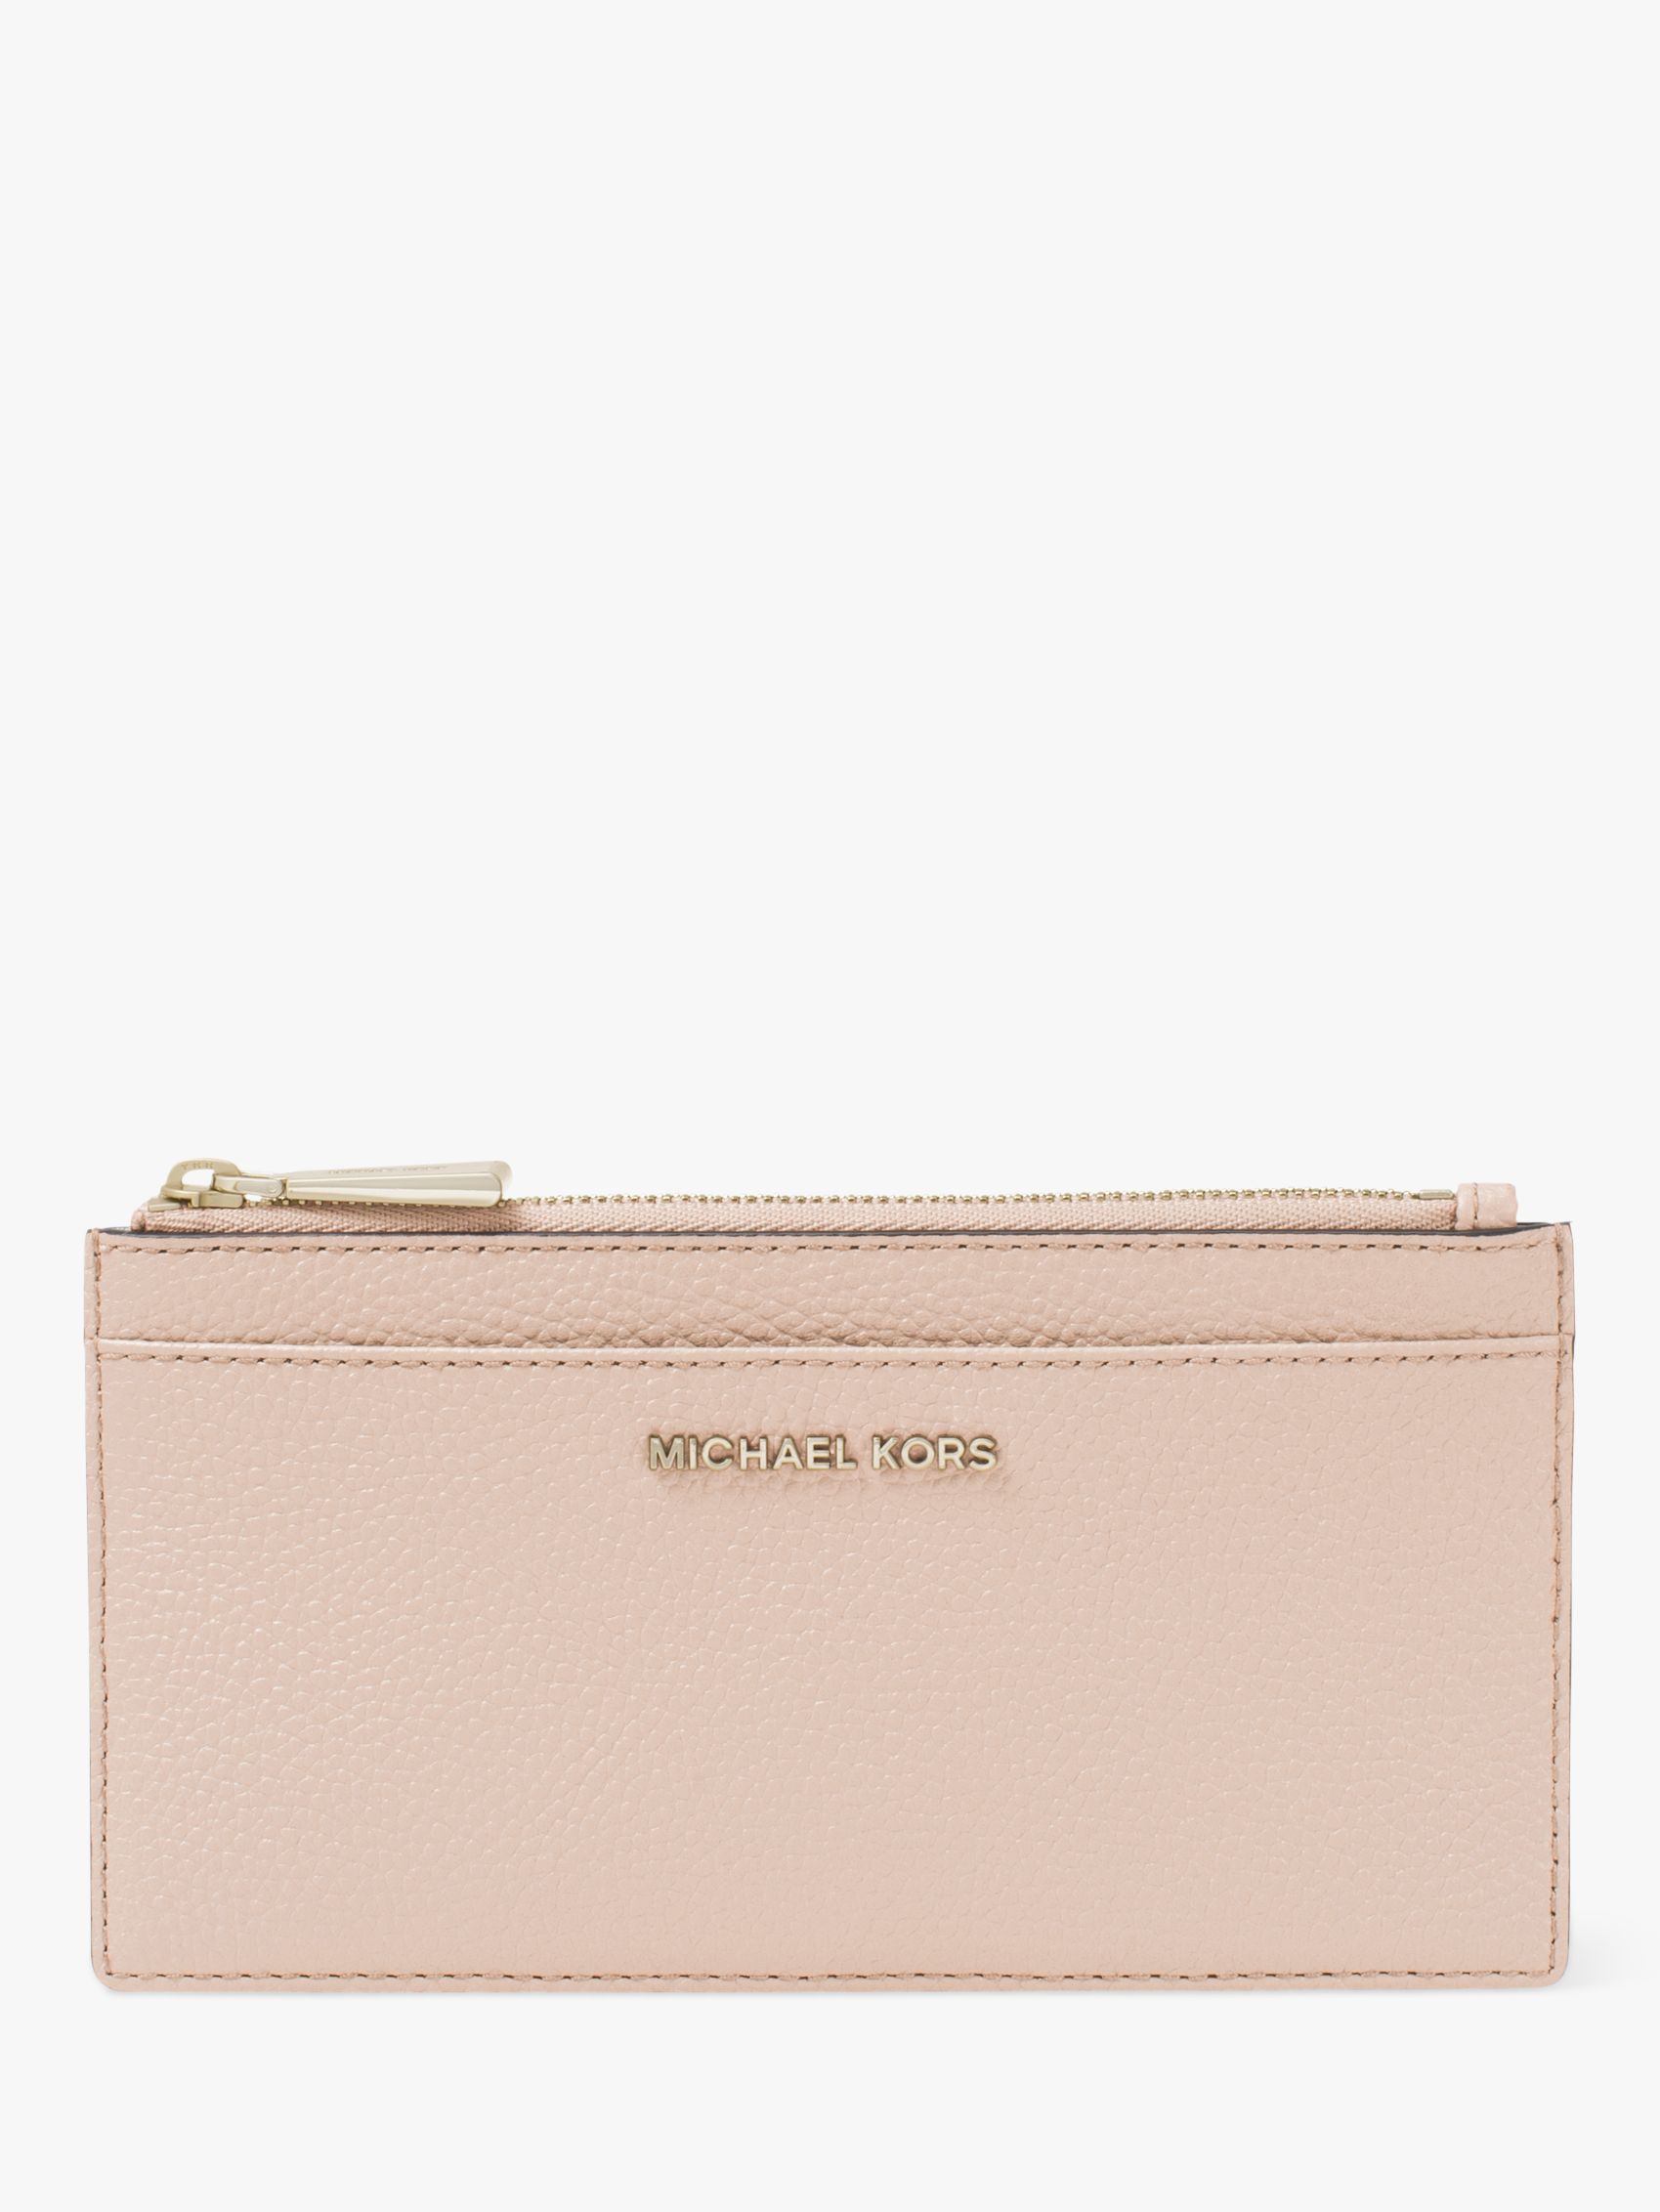 michael kors soft pink purses